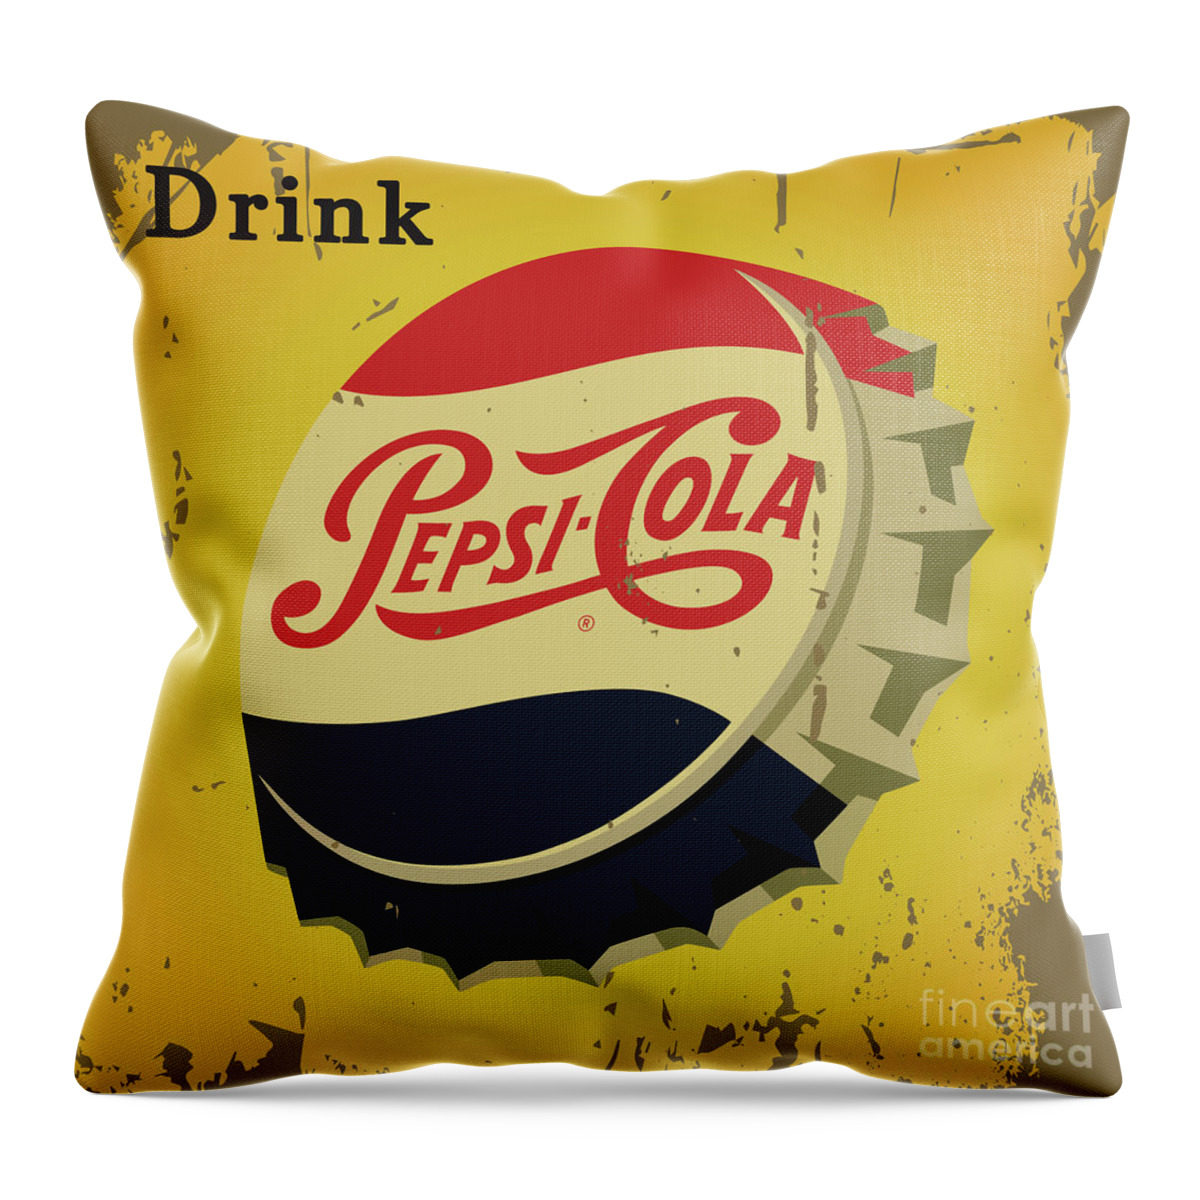 Pepsi Throw Pillow featuring the digital art Vintage Pepsi Cola advertising signboard 01 by Bobbi Freelance